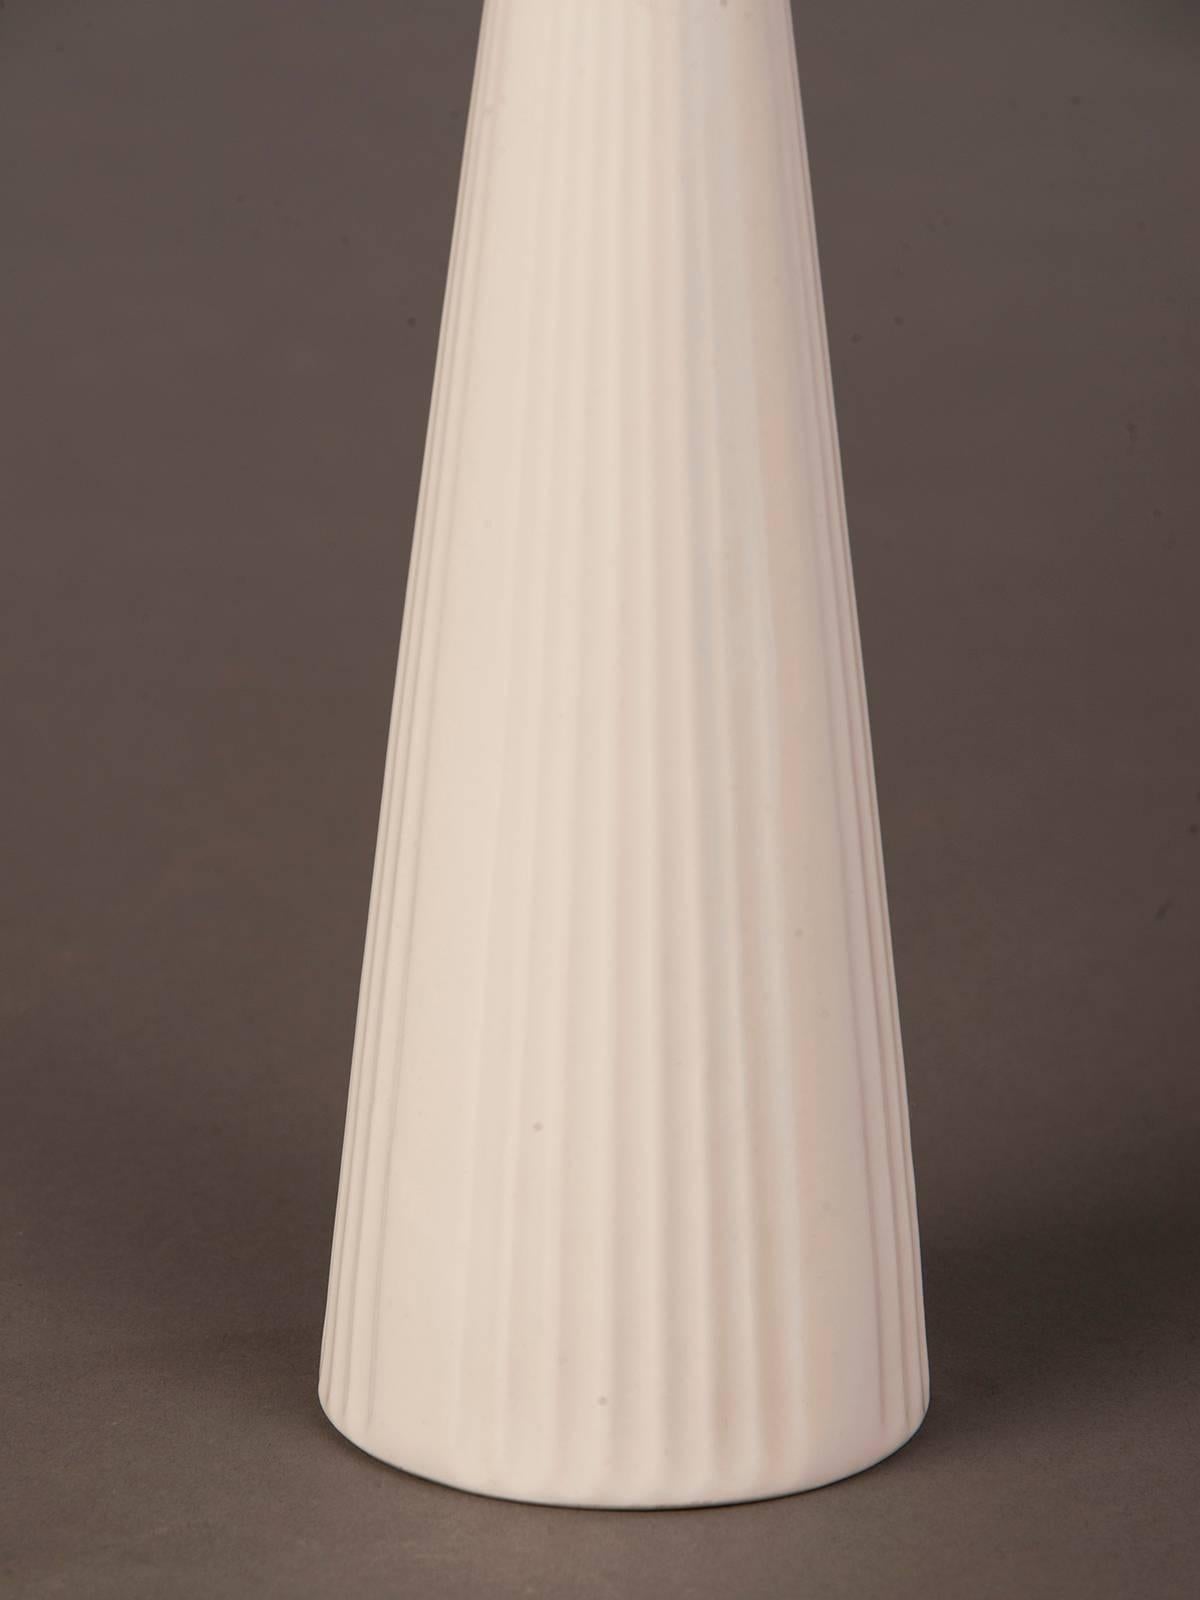 20th Century Vintage Mid-Century Modern German Porcelain Vase, Maker's Mark, circa 1950